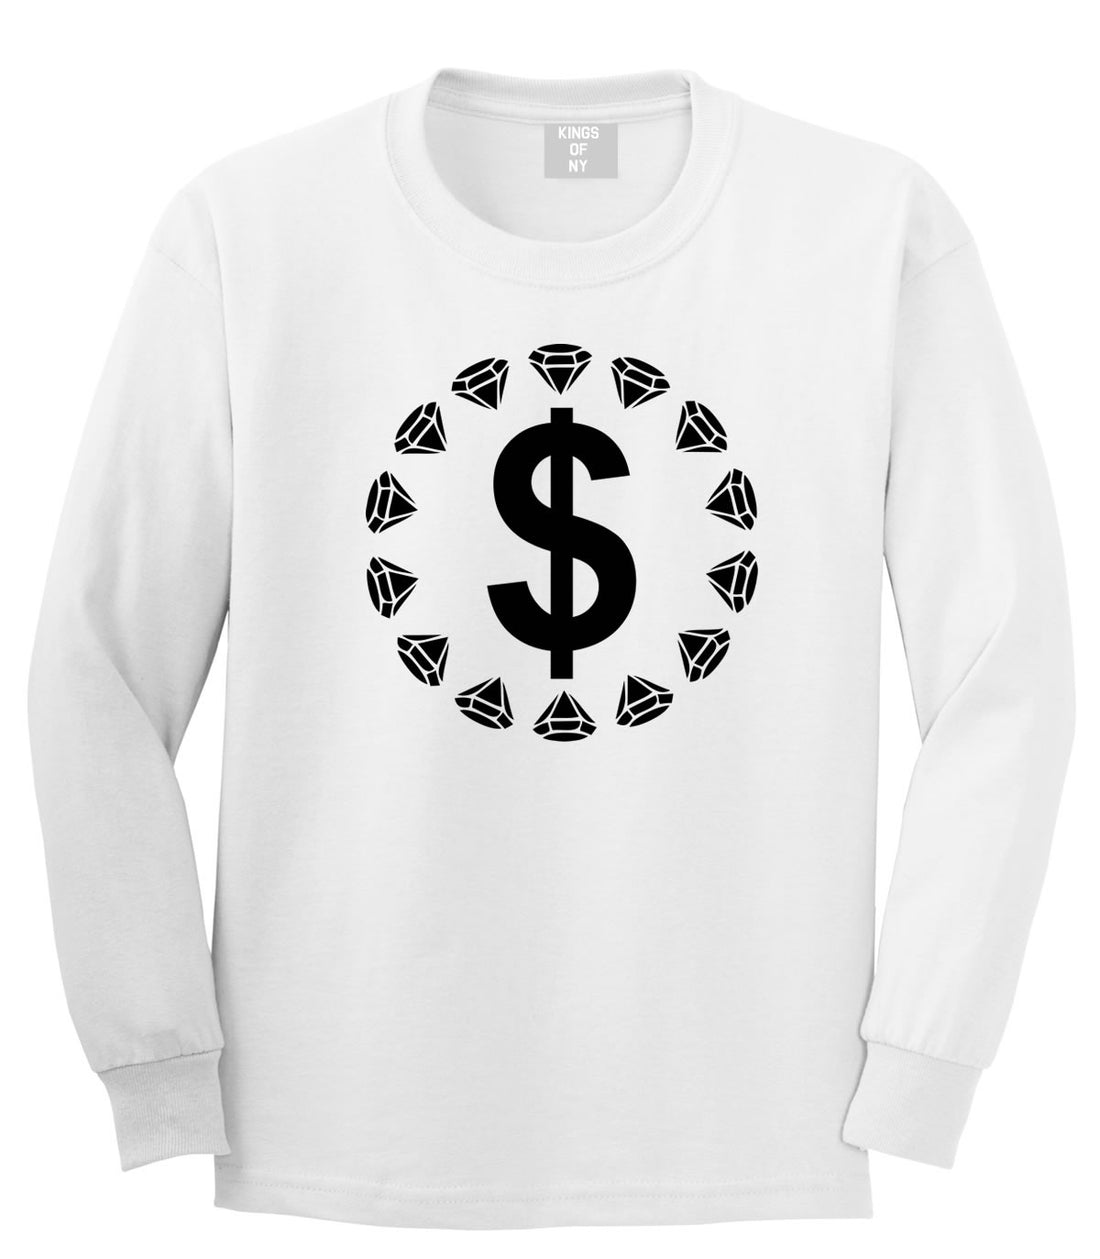 Diamonds Money Sign Logo Boys Kids Long Sleeve T-Shirt in White by Kings Of NY